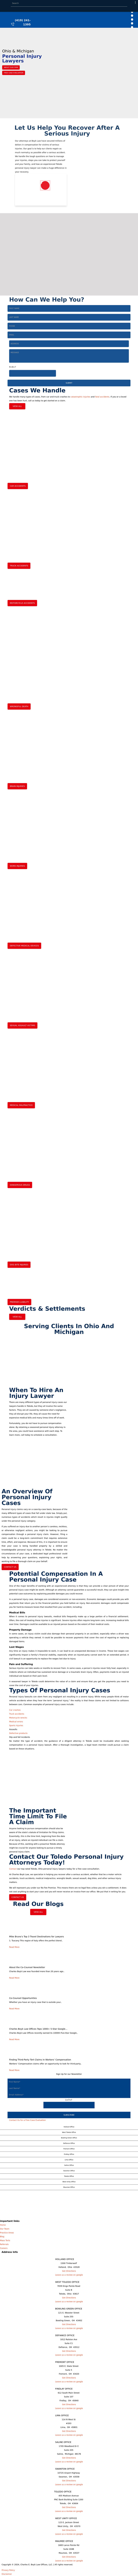 Charles E. Boyk Law Offices, LLC - Findlay OH Lawyers